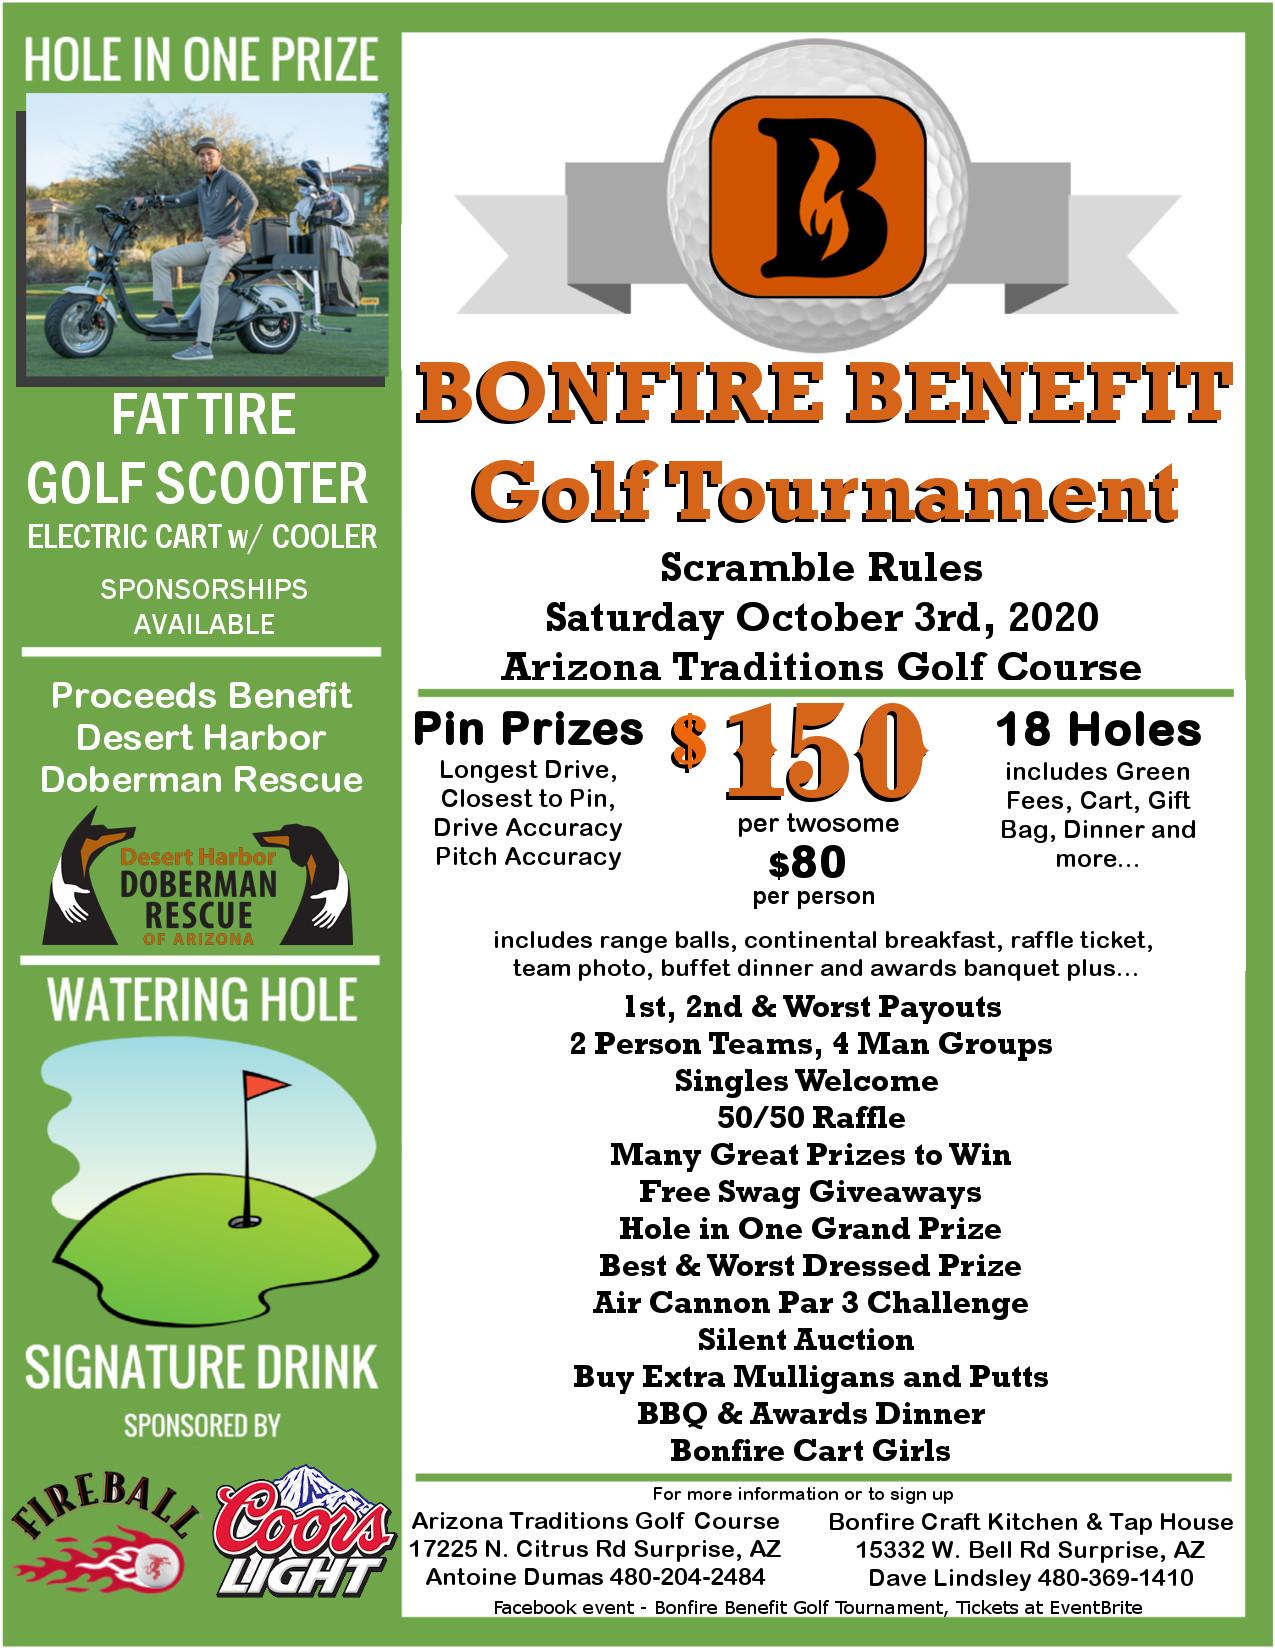 Bonfire Benefit Golf Tournament